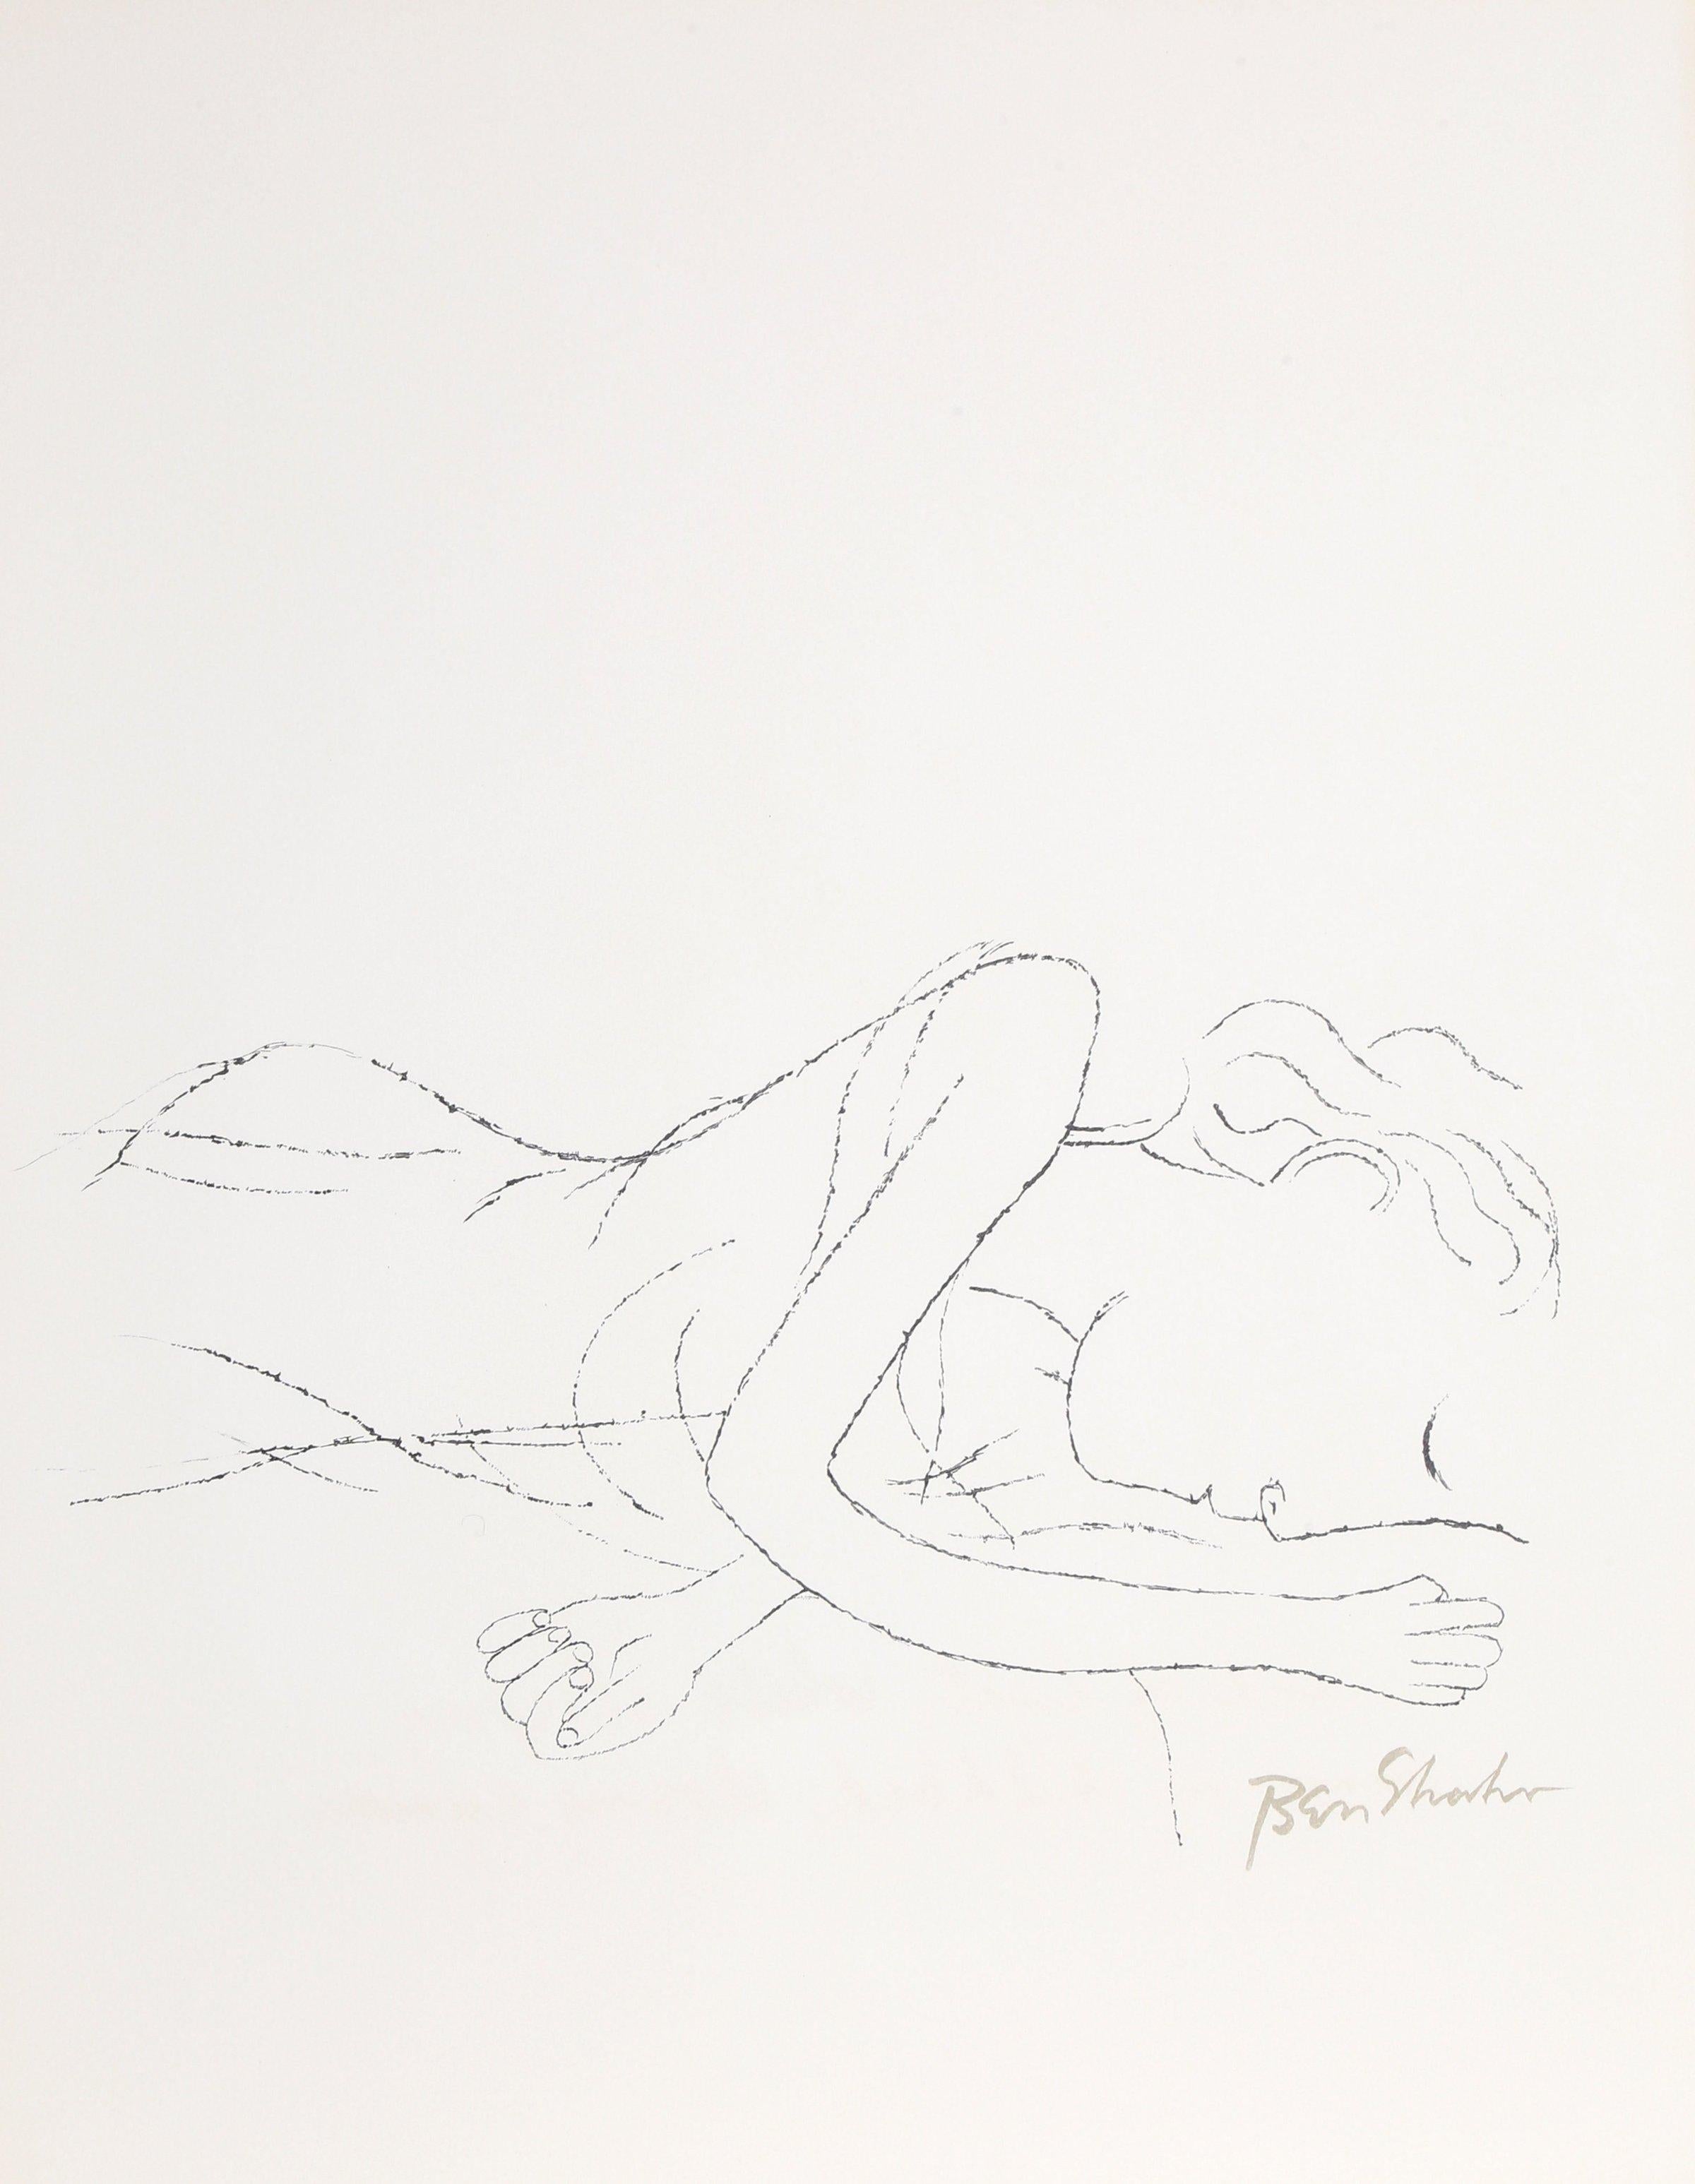 Portrait Print Ben Shahn - Of Light, White Sleeping Women in Childbed (Femmes endormies dans une chambre à coucher blanche) - Portfolio de Rilke